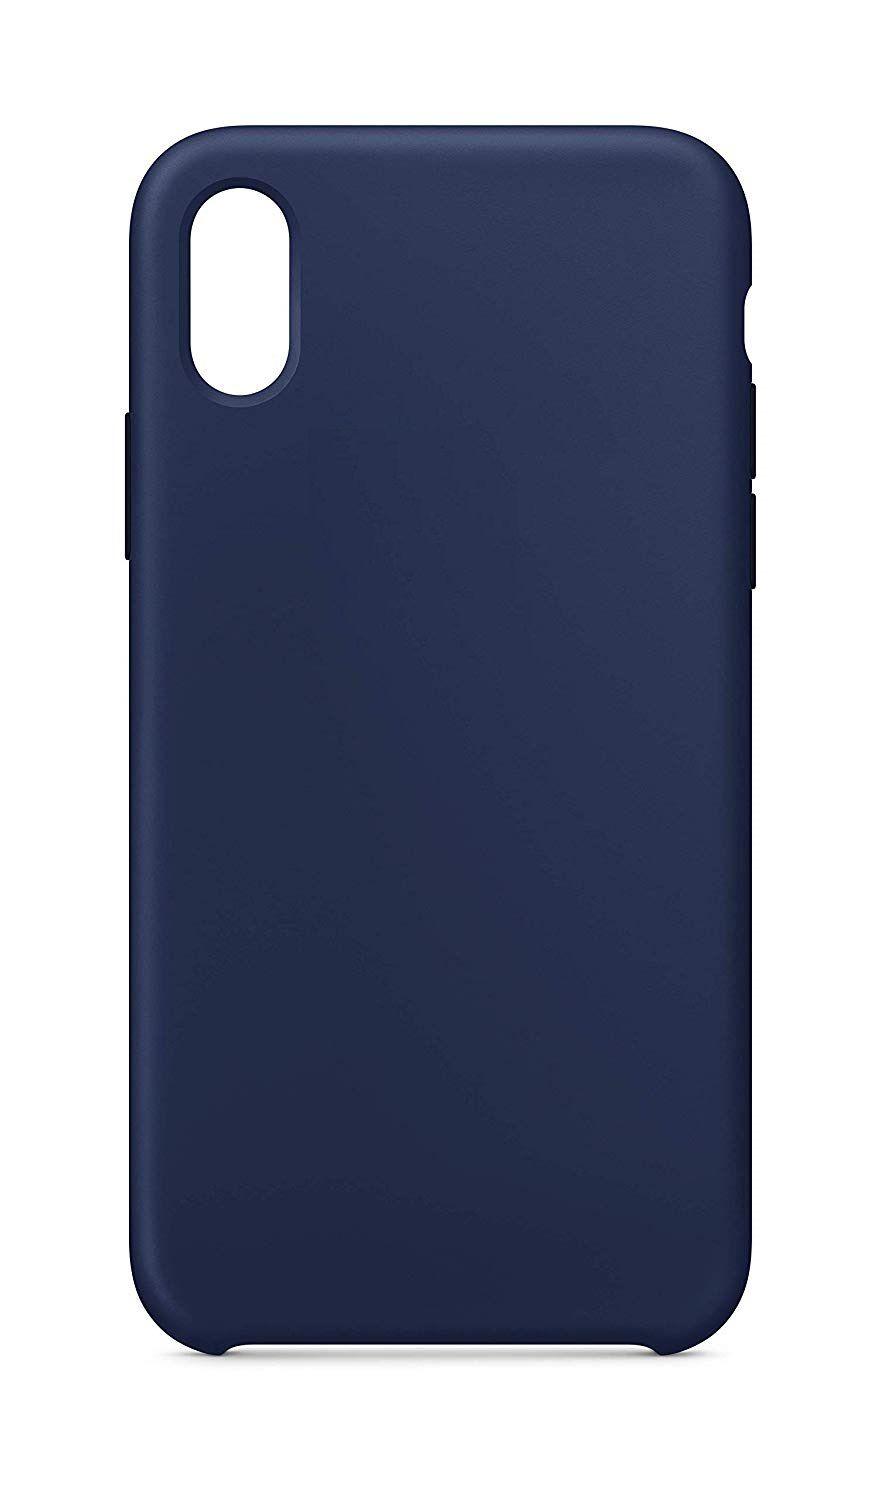 Silikonový obal iPhone X tmavě modrý